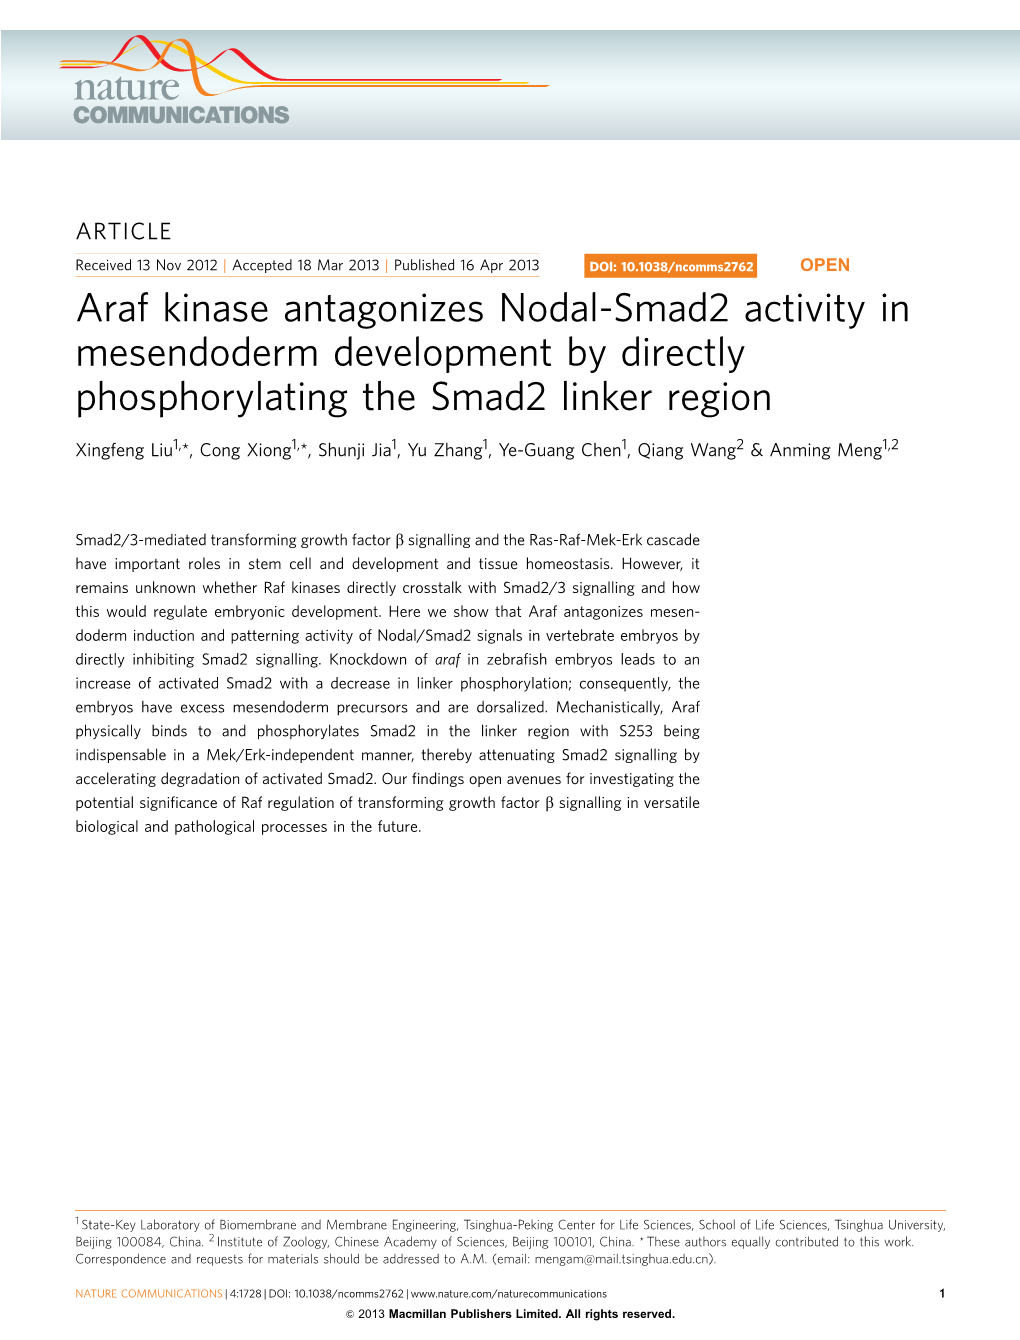 Araf Kinase Antagonizes Nodal-Smad2 Activity in Mesendoderm Development by Directly Phosphorylating the Smad2 Linker Region